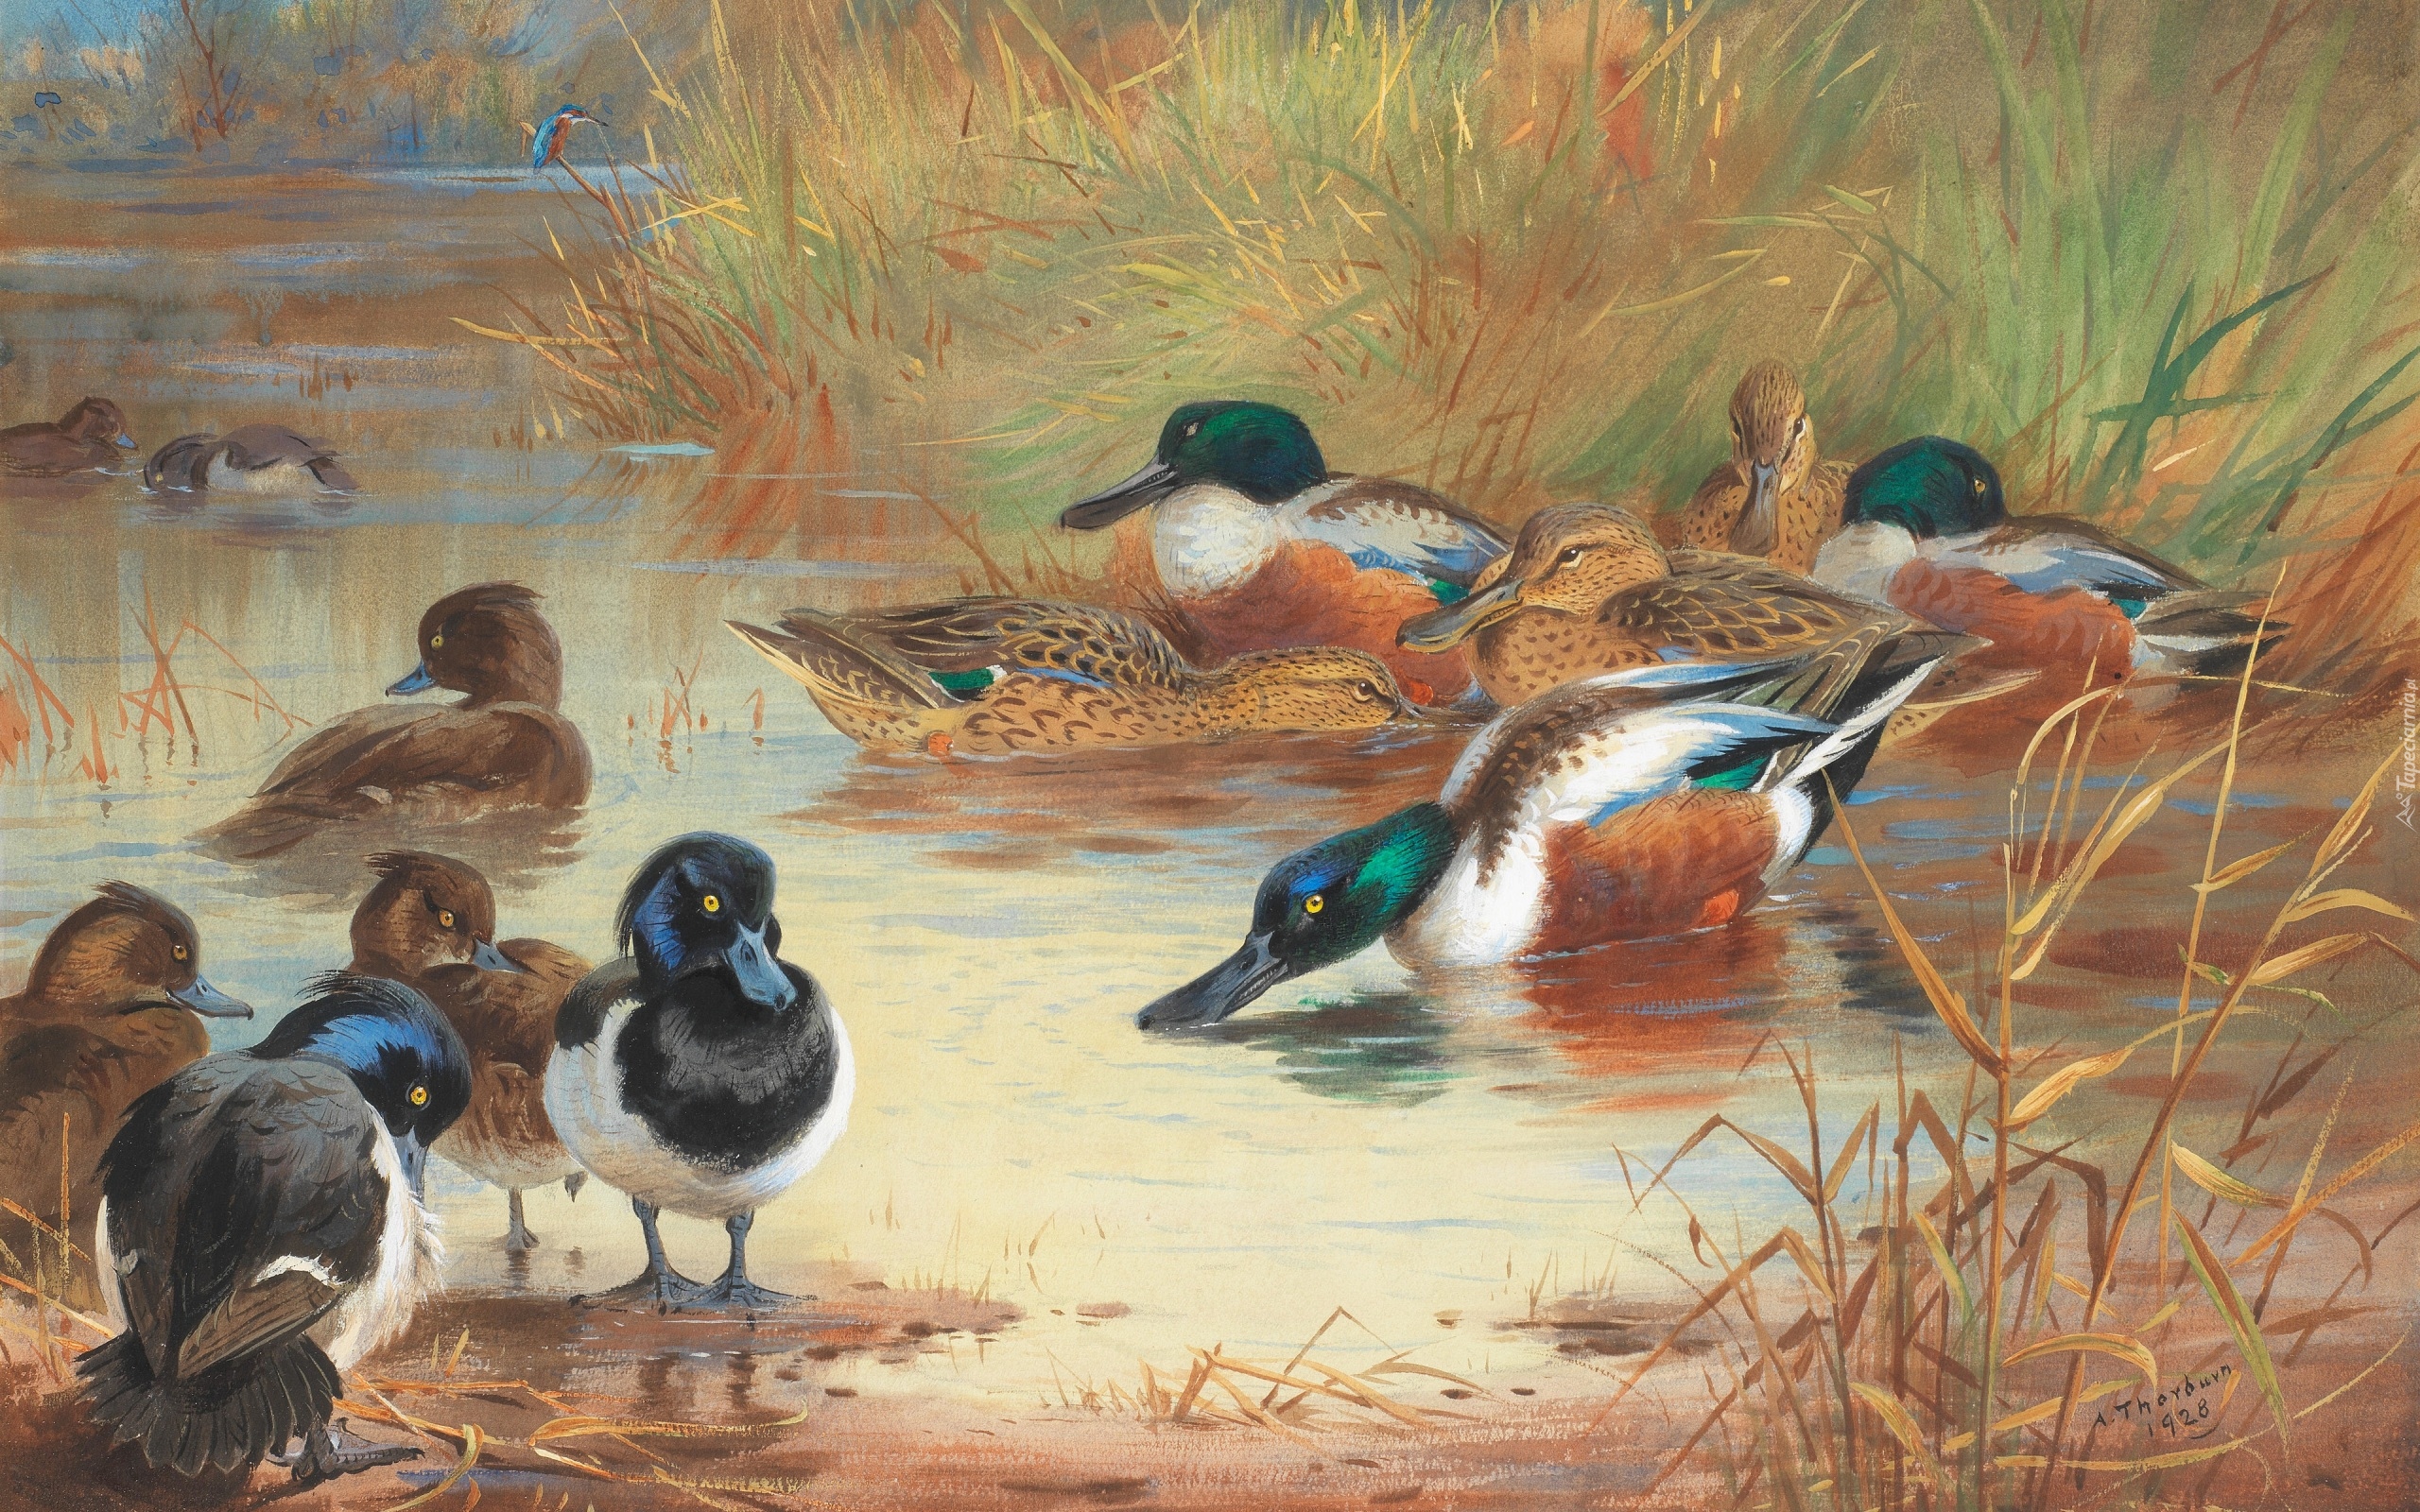 Reprodukcja obrazu, Malarstwo, Archibald Thorburn, Ptaki, Kaczki, Jezioro